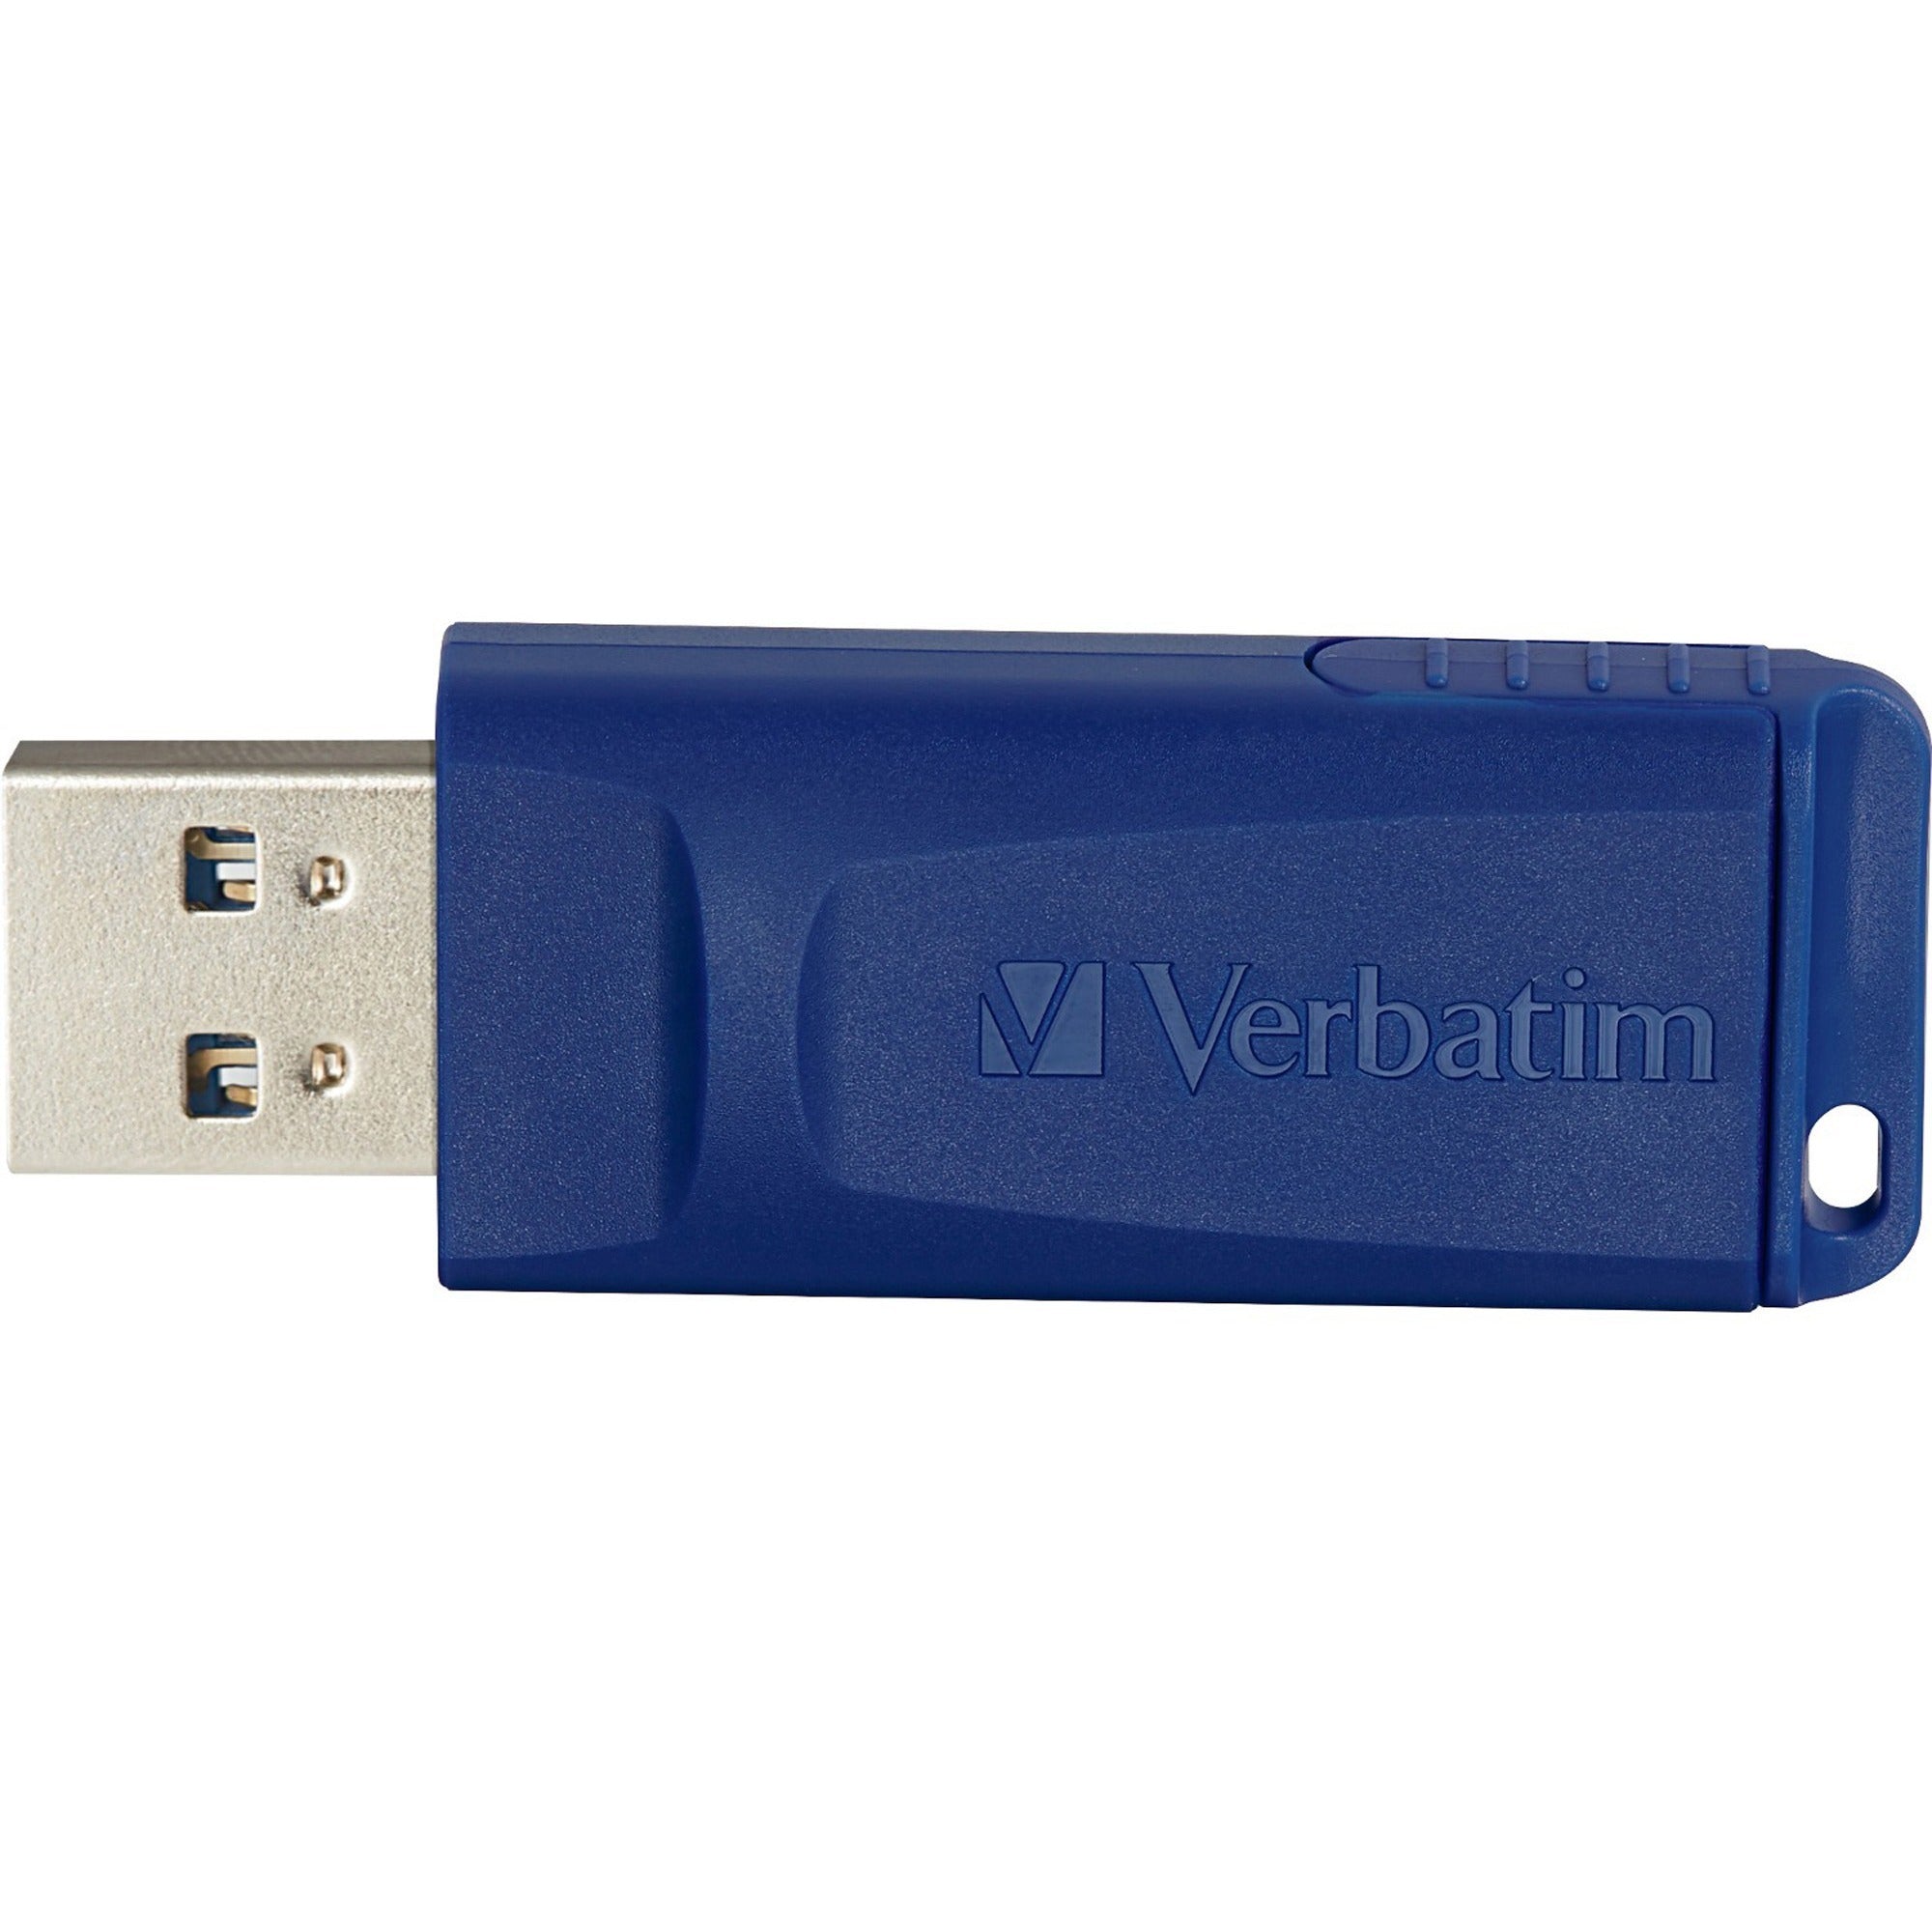 8gb-usb-flash-drive-5pk-blue-8gb-5-pk_ver99121 - 2